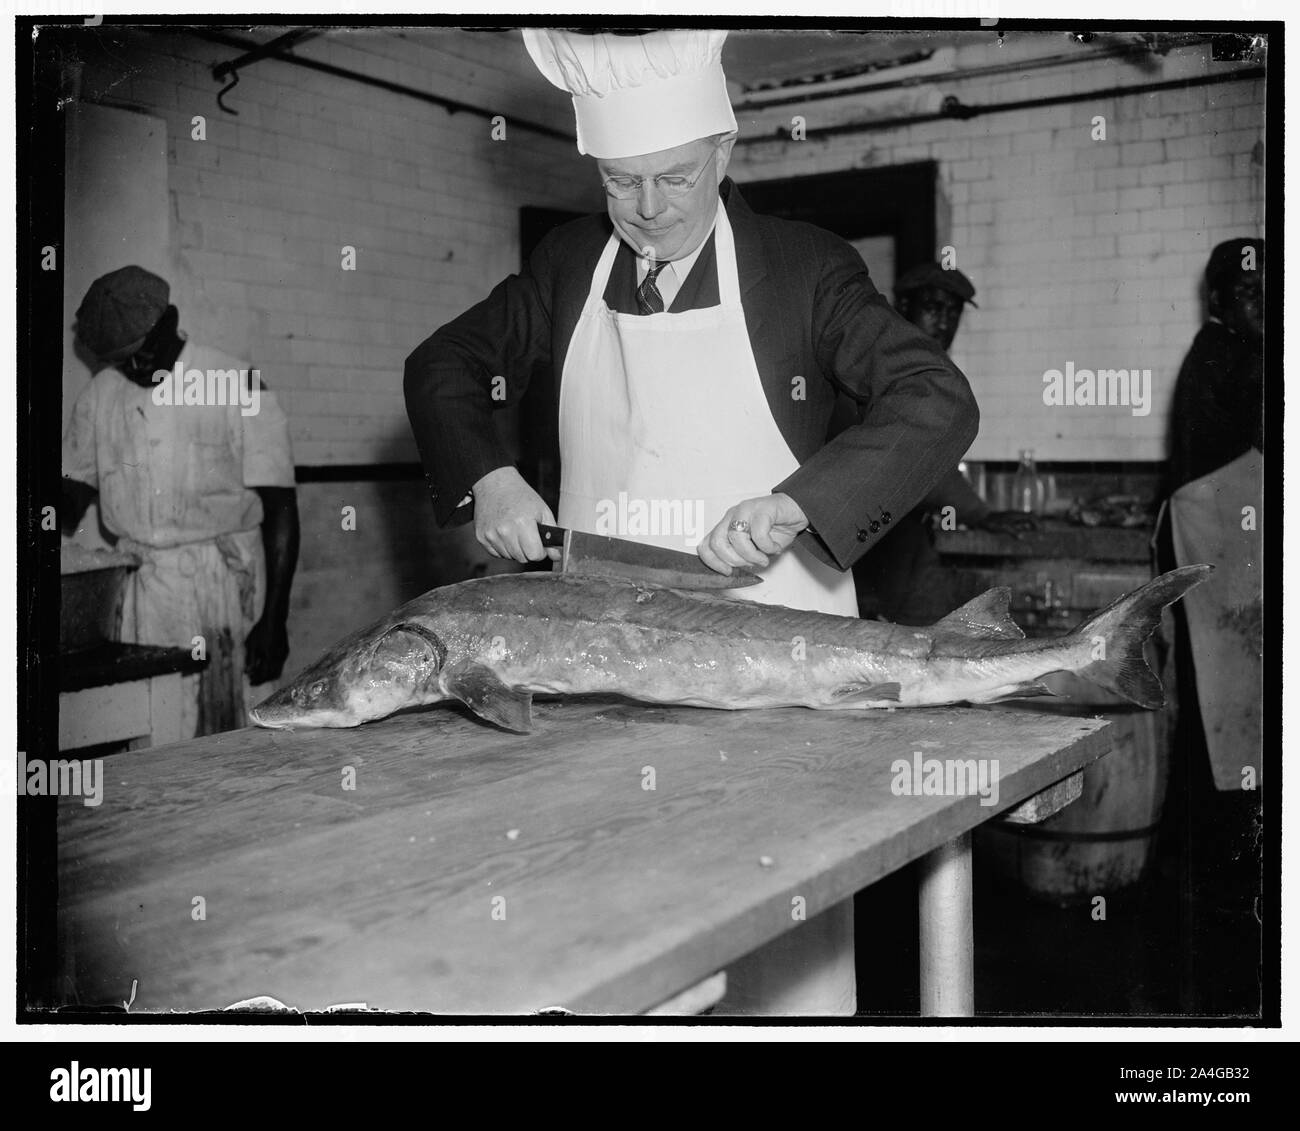 Sturgeon fishing Black and White Stock Photos & Images - Alamy